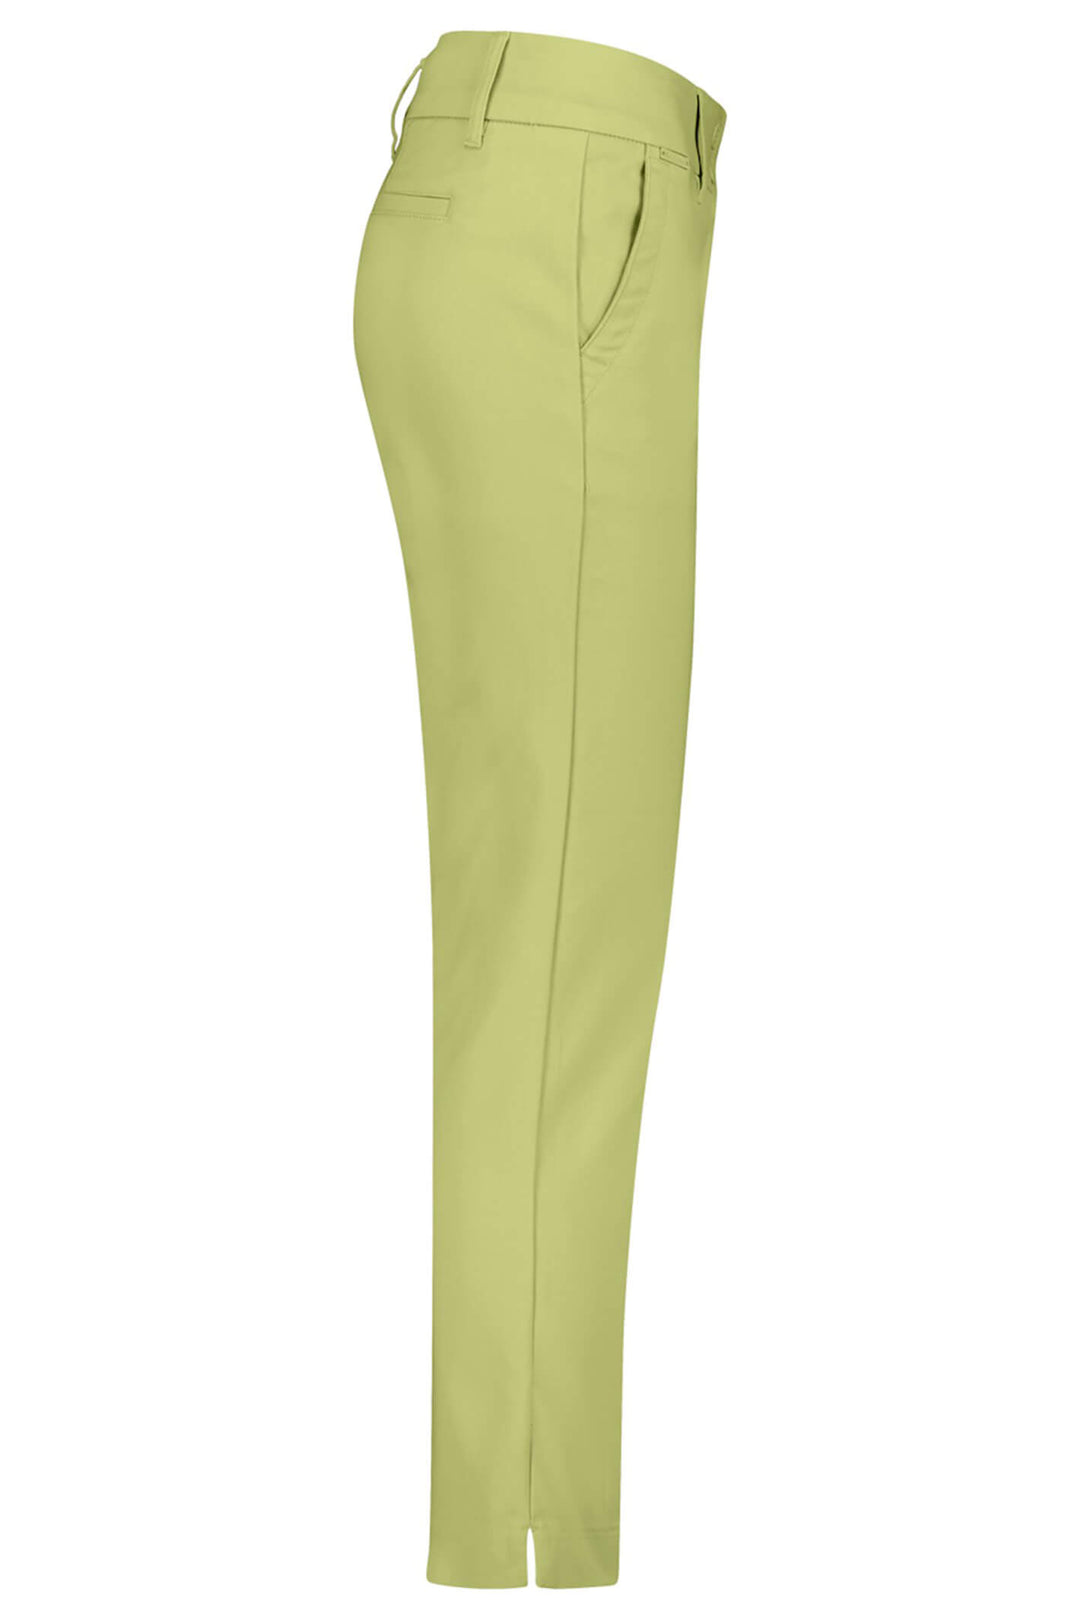 Red Button SRB3944 Diana Kiwi Green Smart Colour Trousers - Olivia Grace Fashion